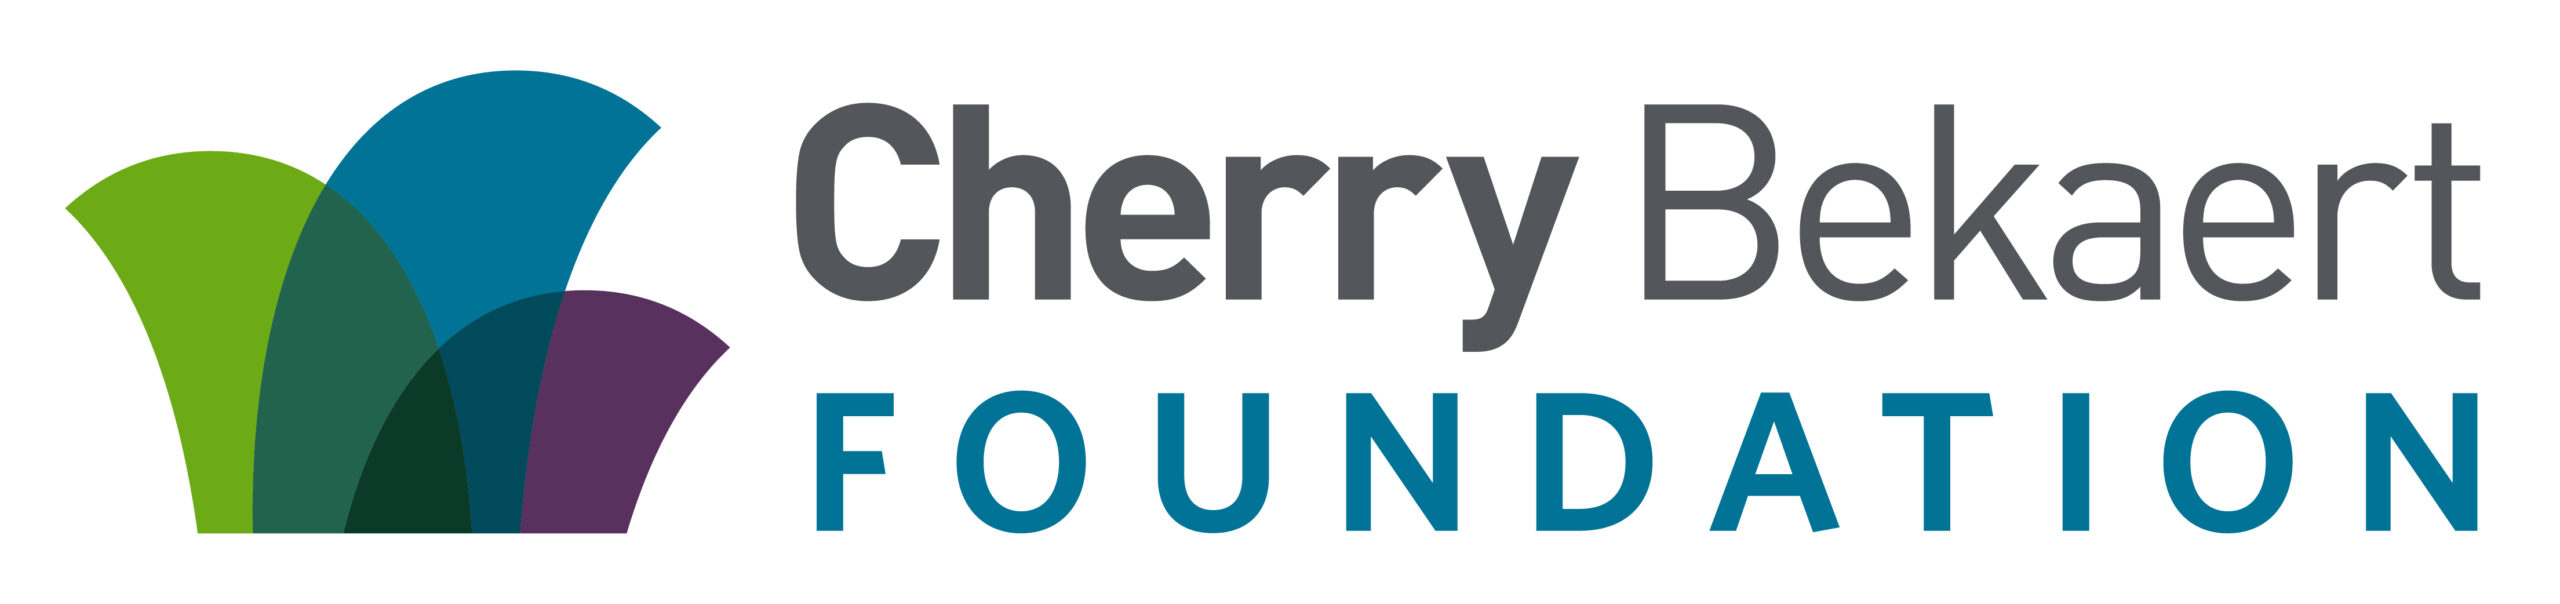 Cherry Bekaert Foundation logo